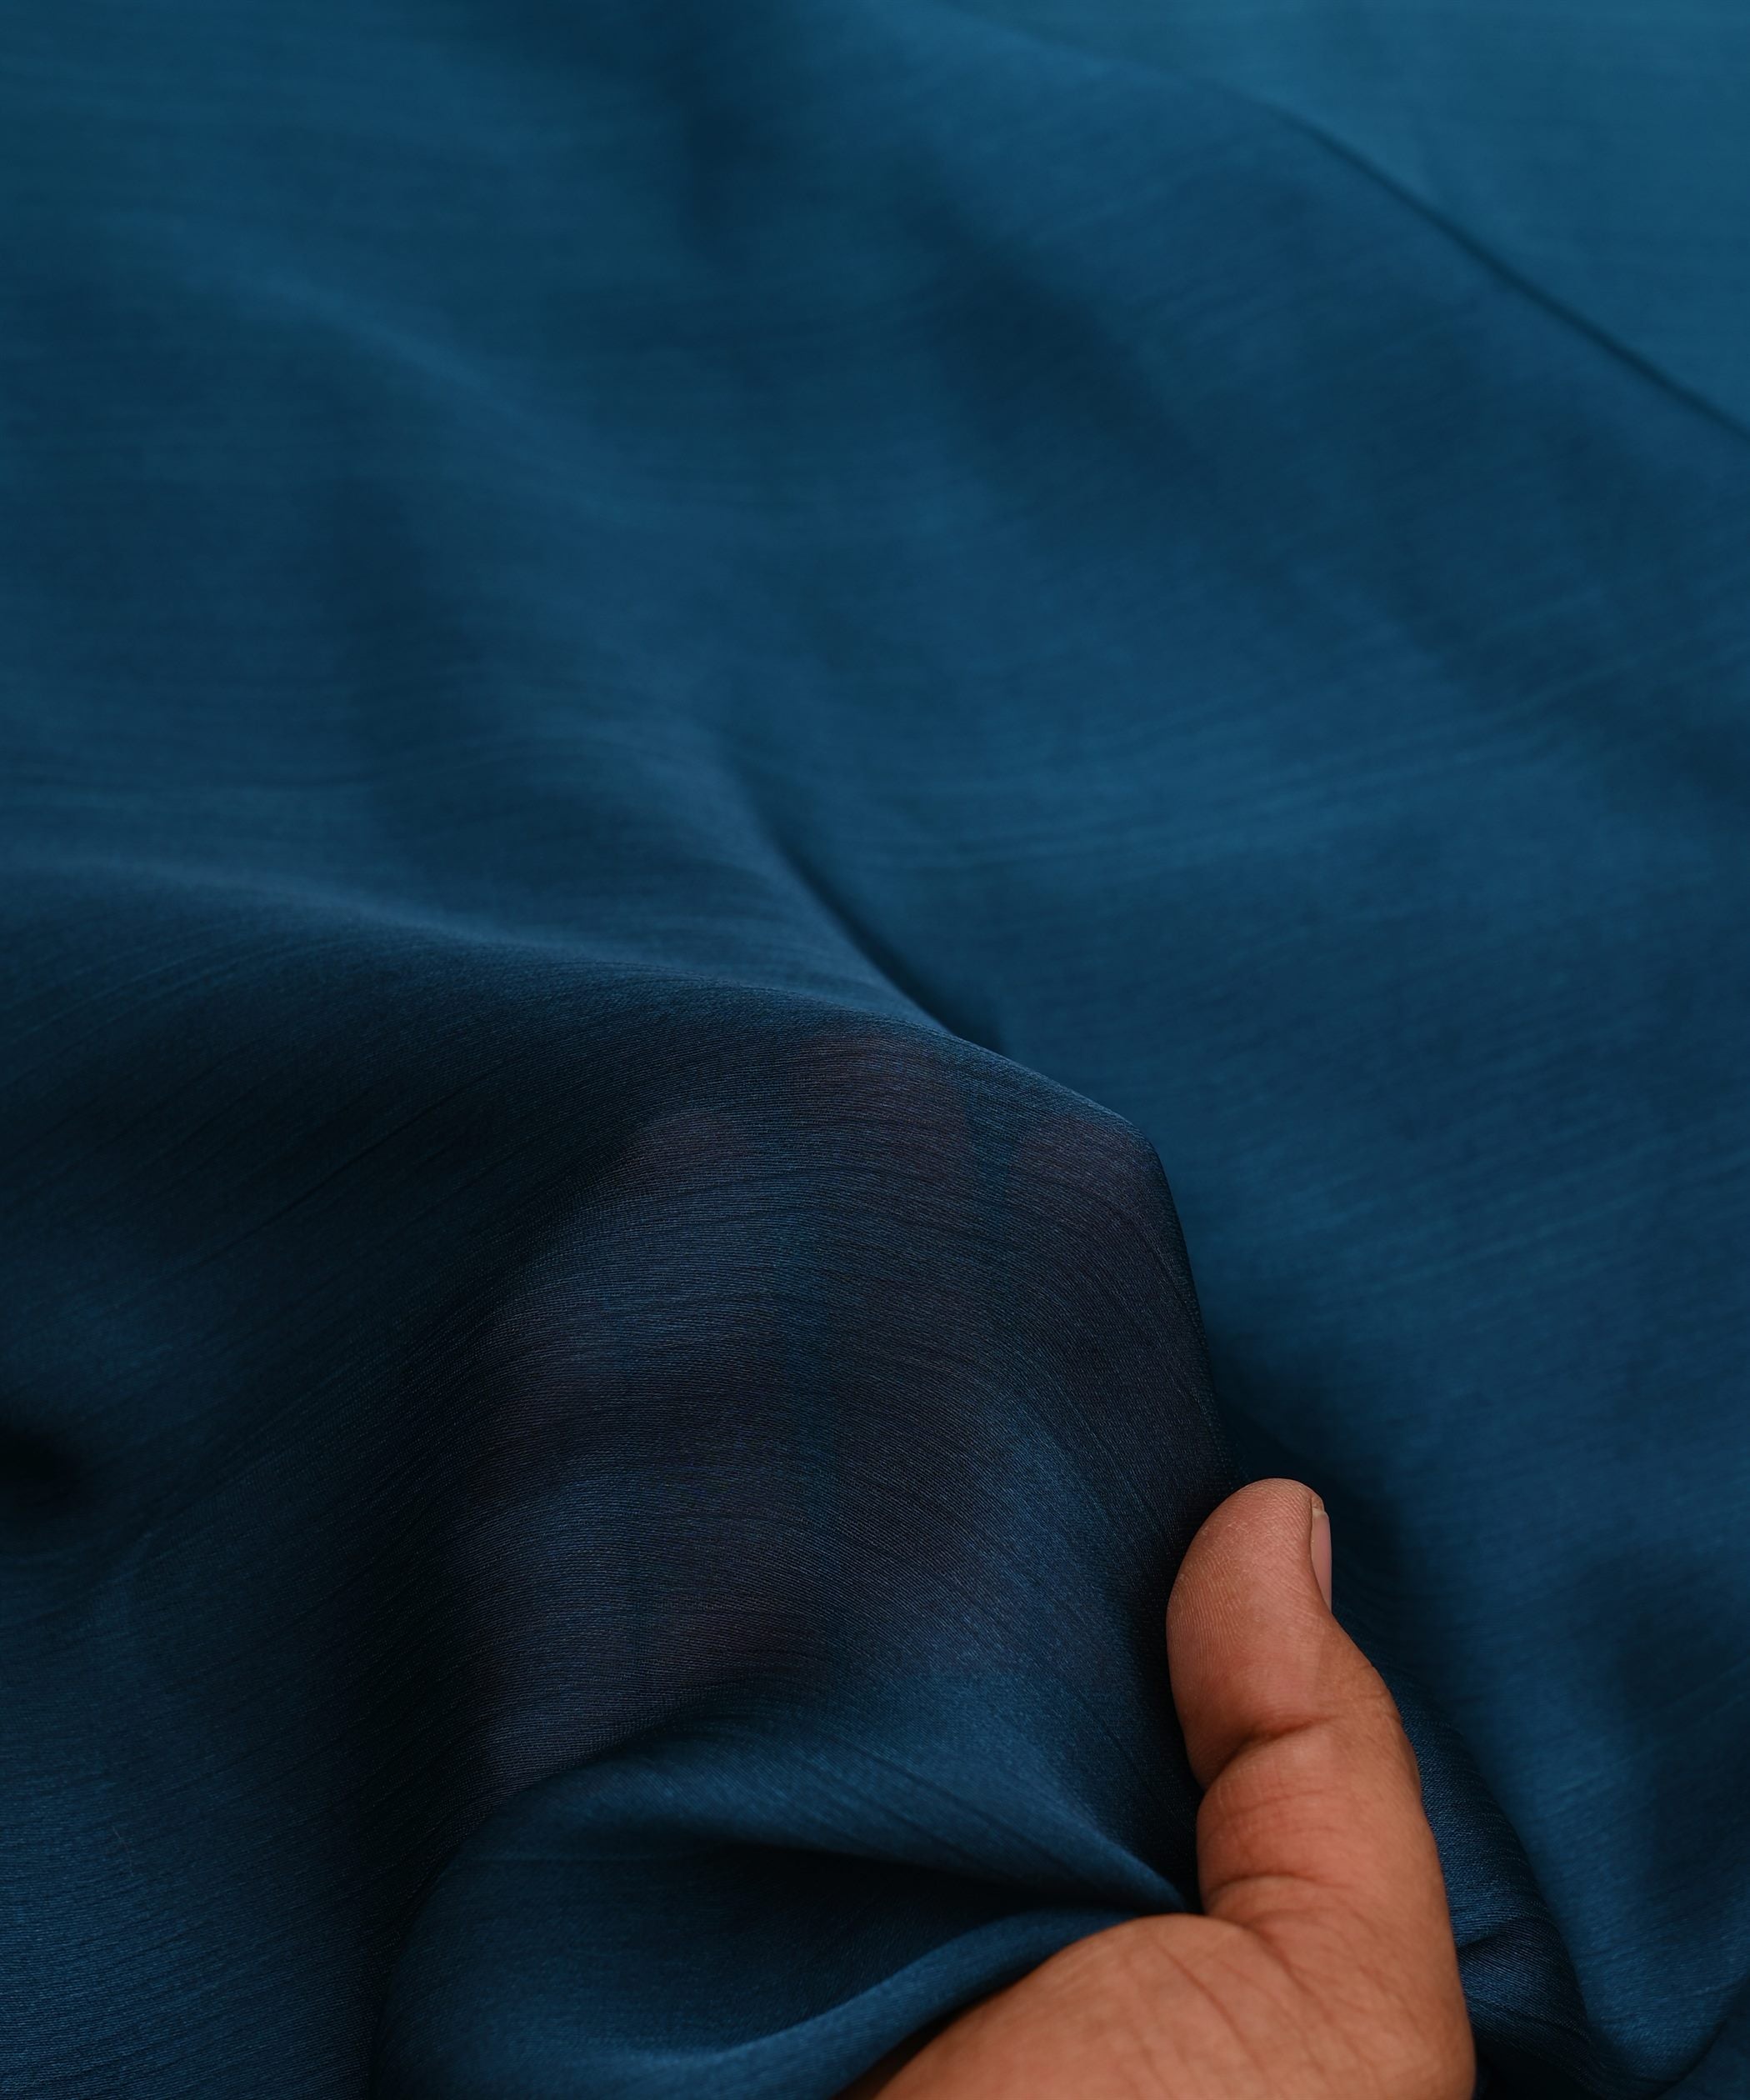 Teal Plain Dyed Shaded Satin Chiffon Fabric